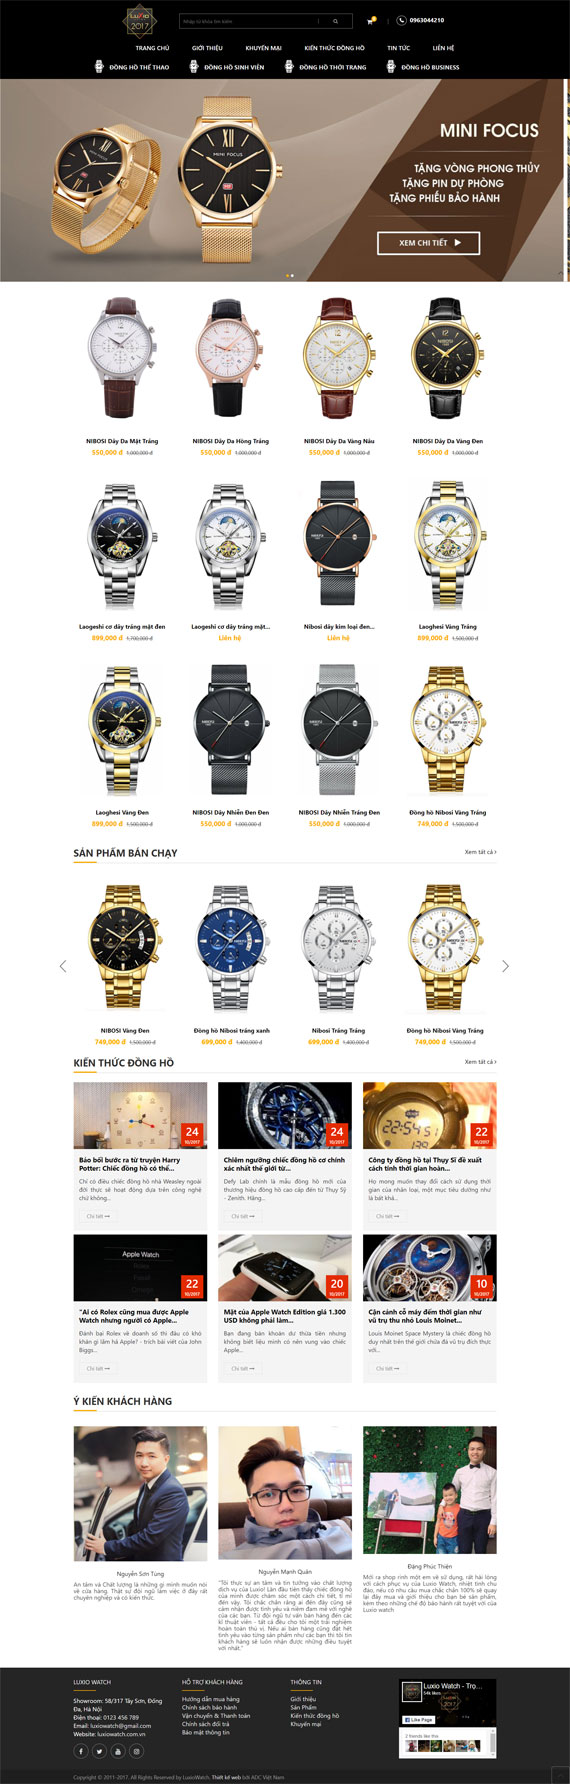 Giao diện website shop đồng hồ Luxio Watch thiết kế bởi ADC Việt Nam